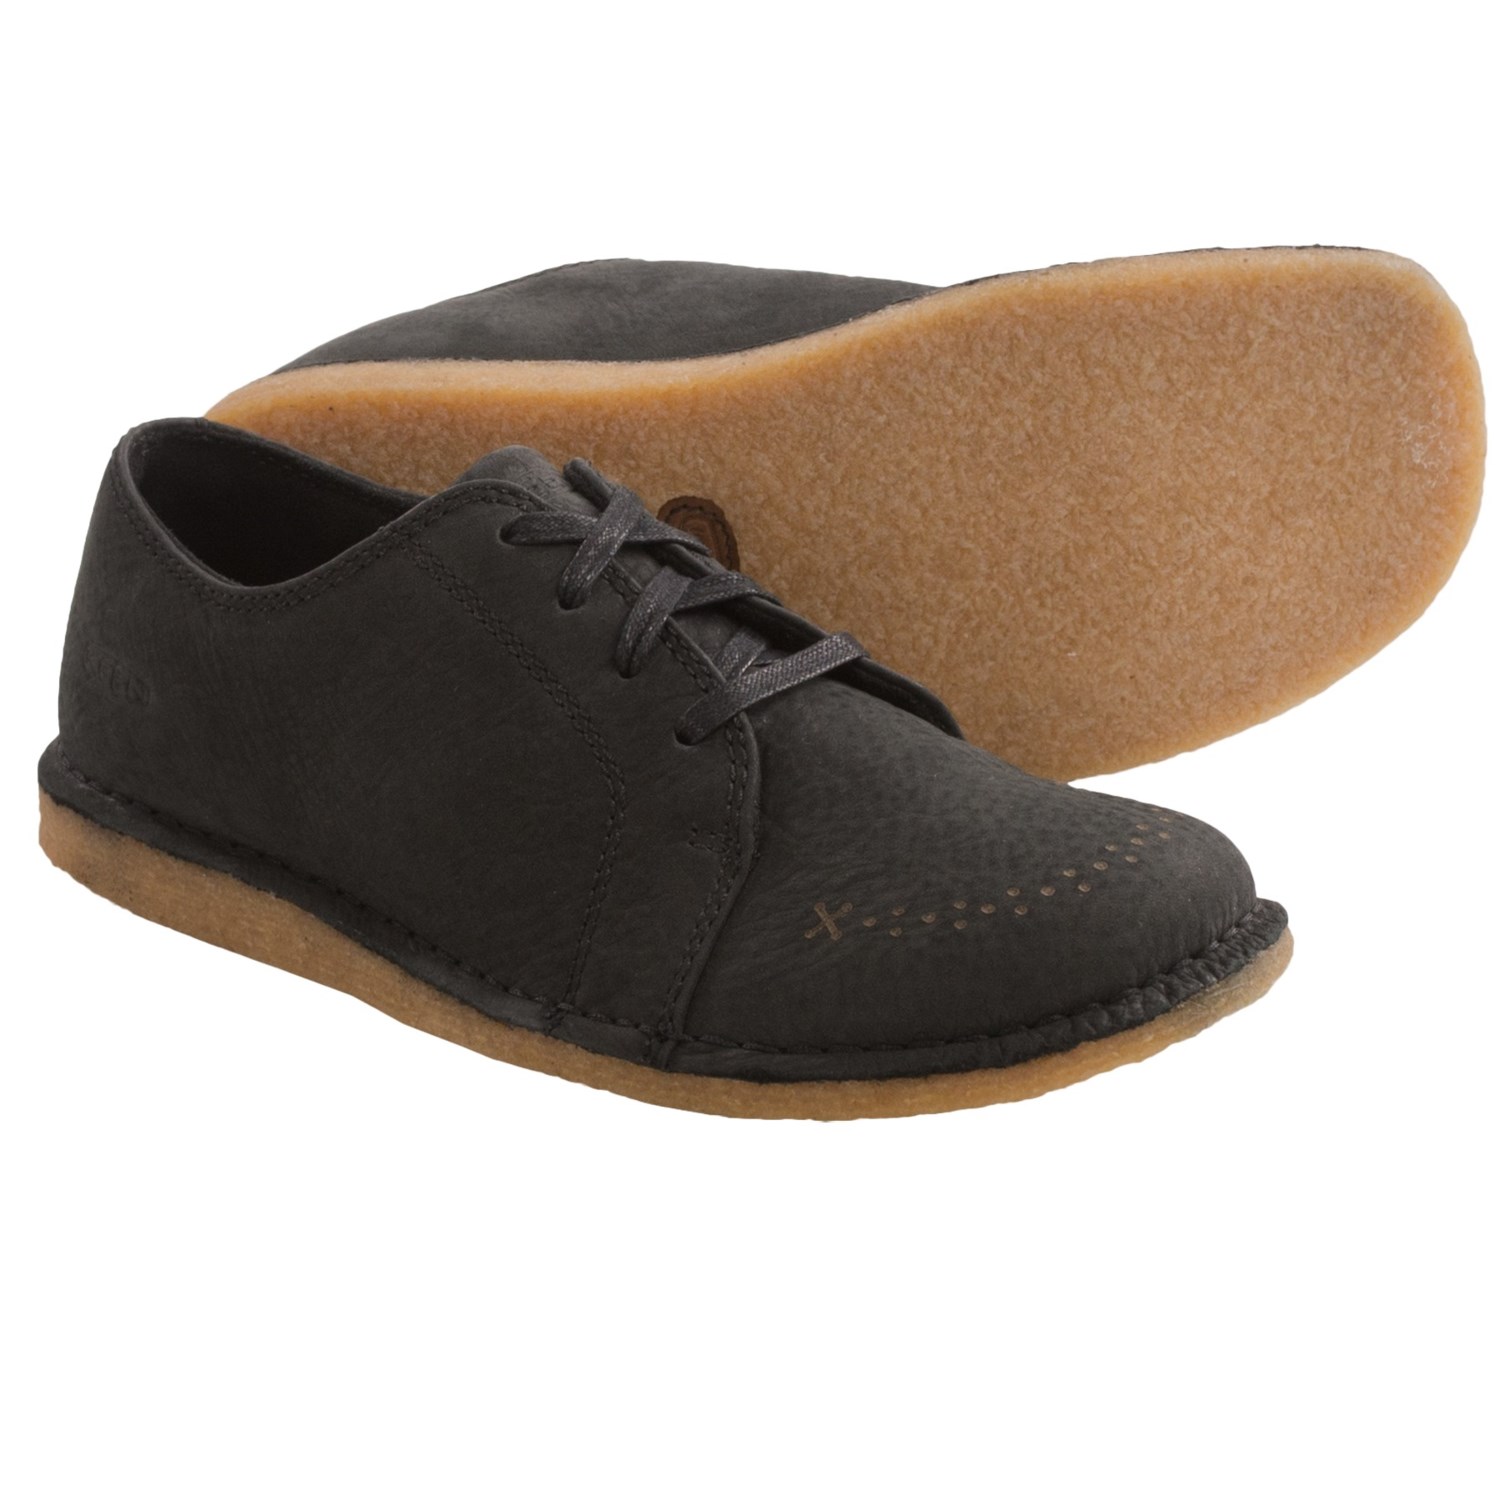 Keen Sierra Lace Shoes - Nubuck (For Women) - Save 62%